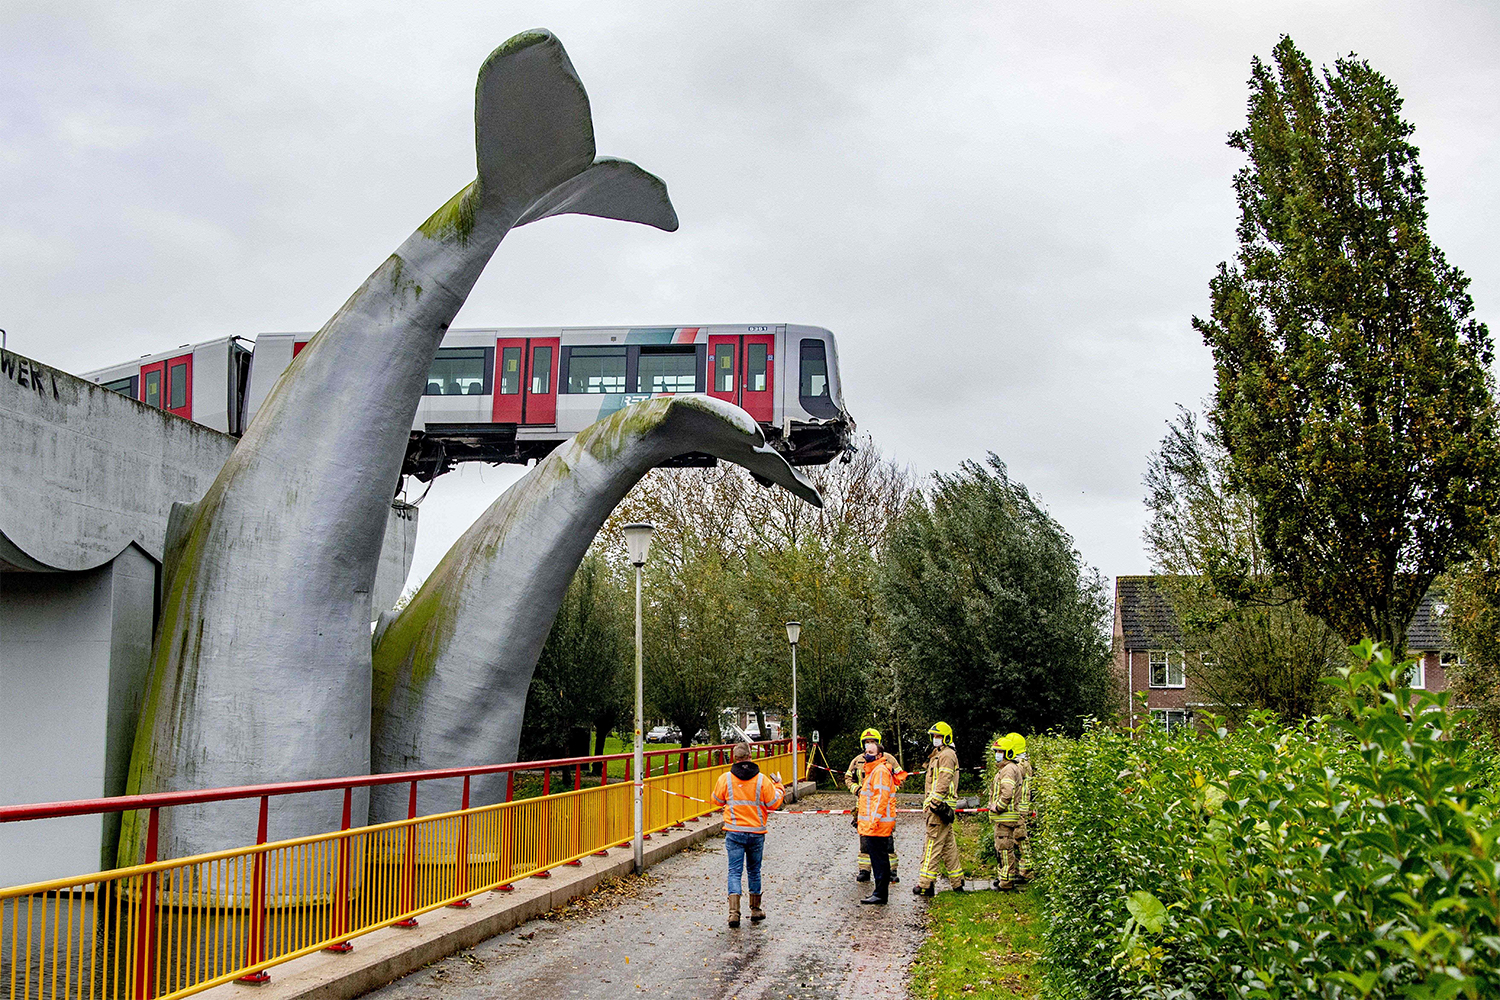 Whale tail sculpture saves train